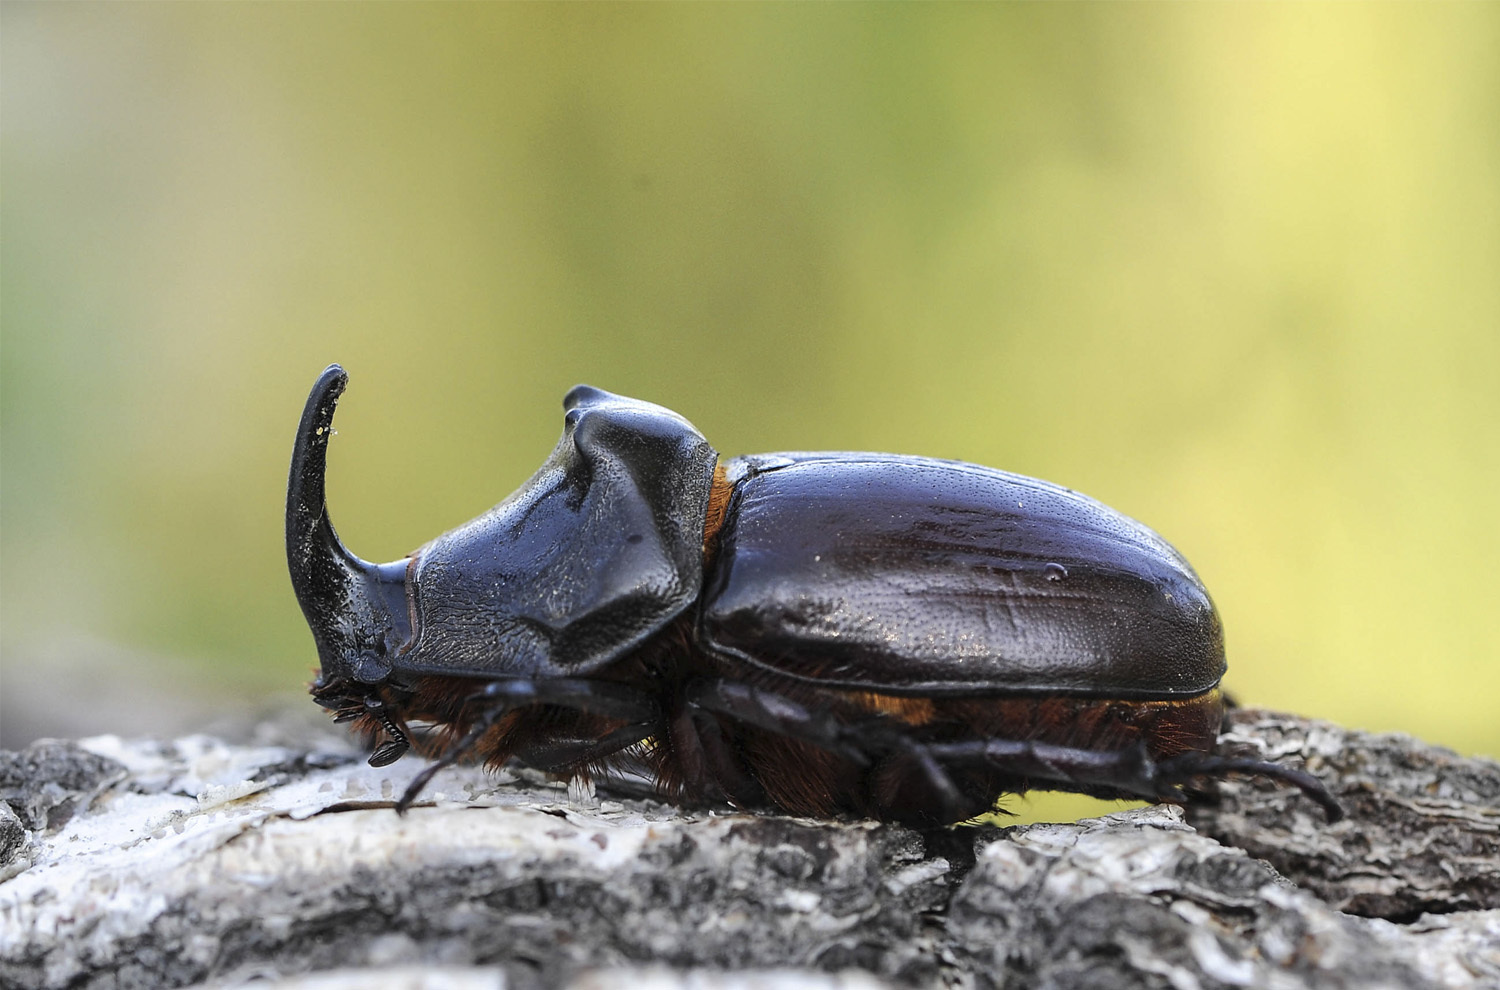 Rhinoceros beetle (Oryctes nasicornis - Lucanidae)